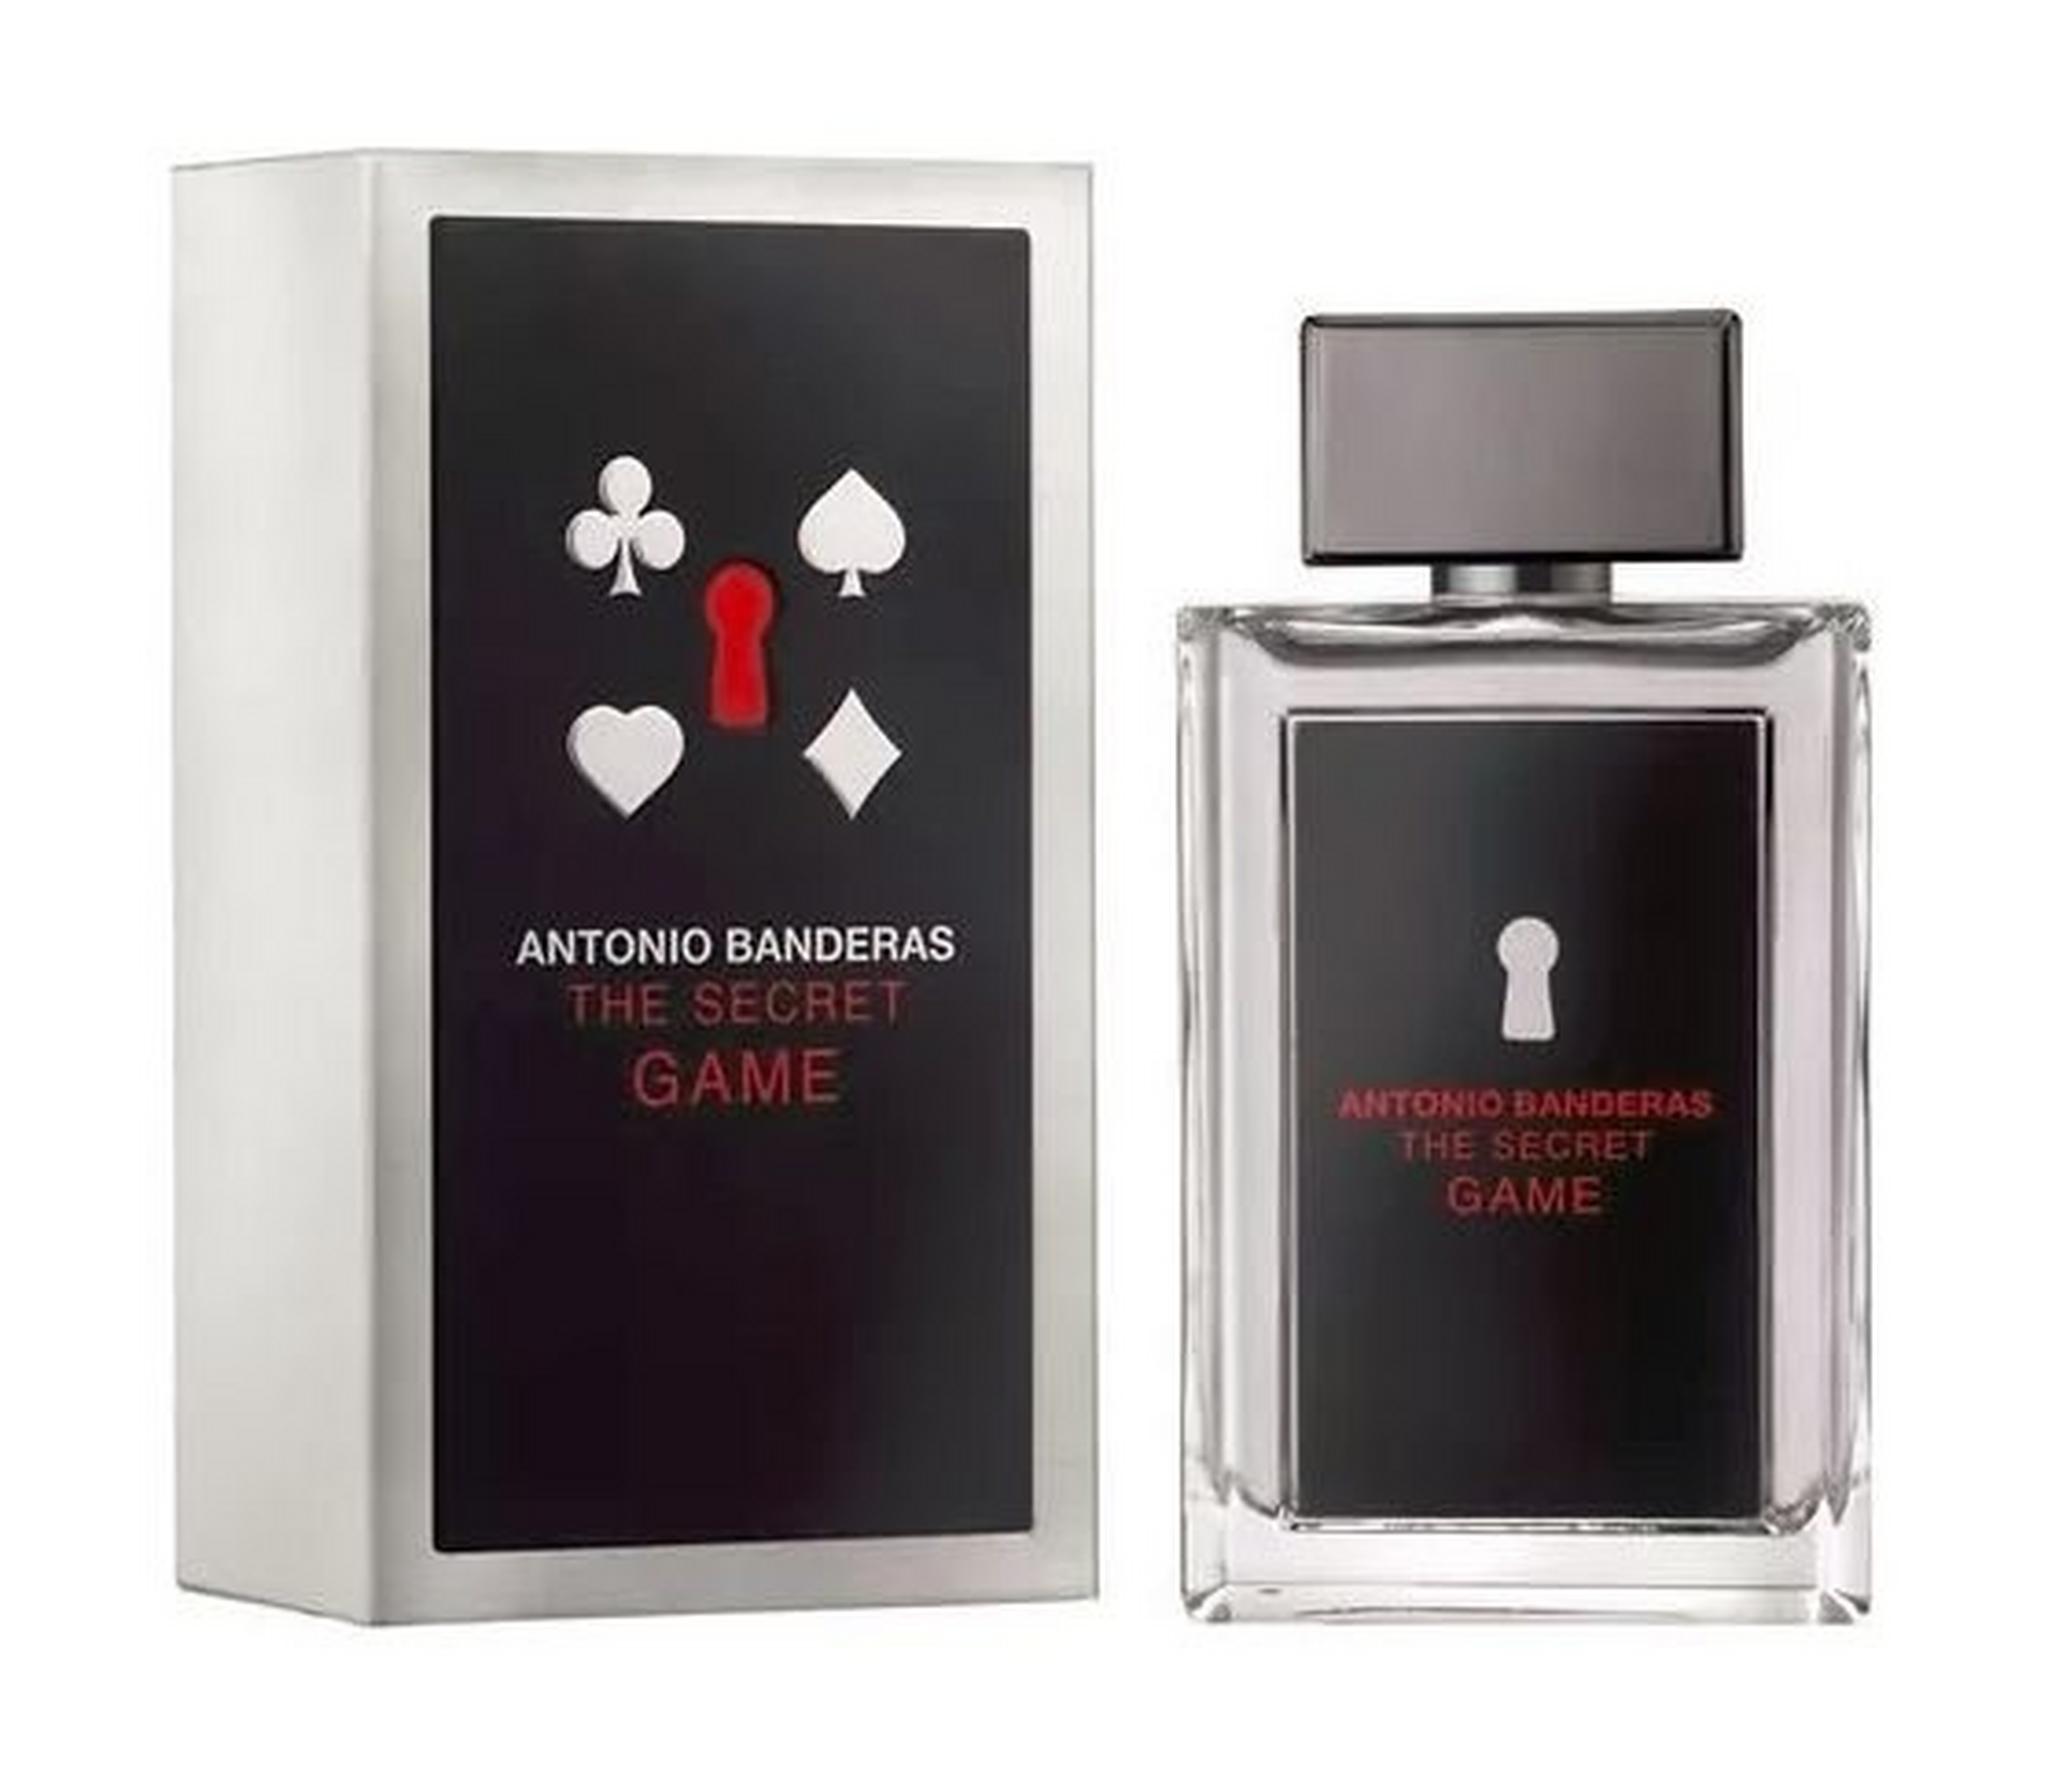 Antonio Banderas The Secret Game 100ml Mens Perfume Eau de Toilette